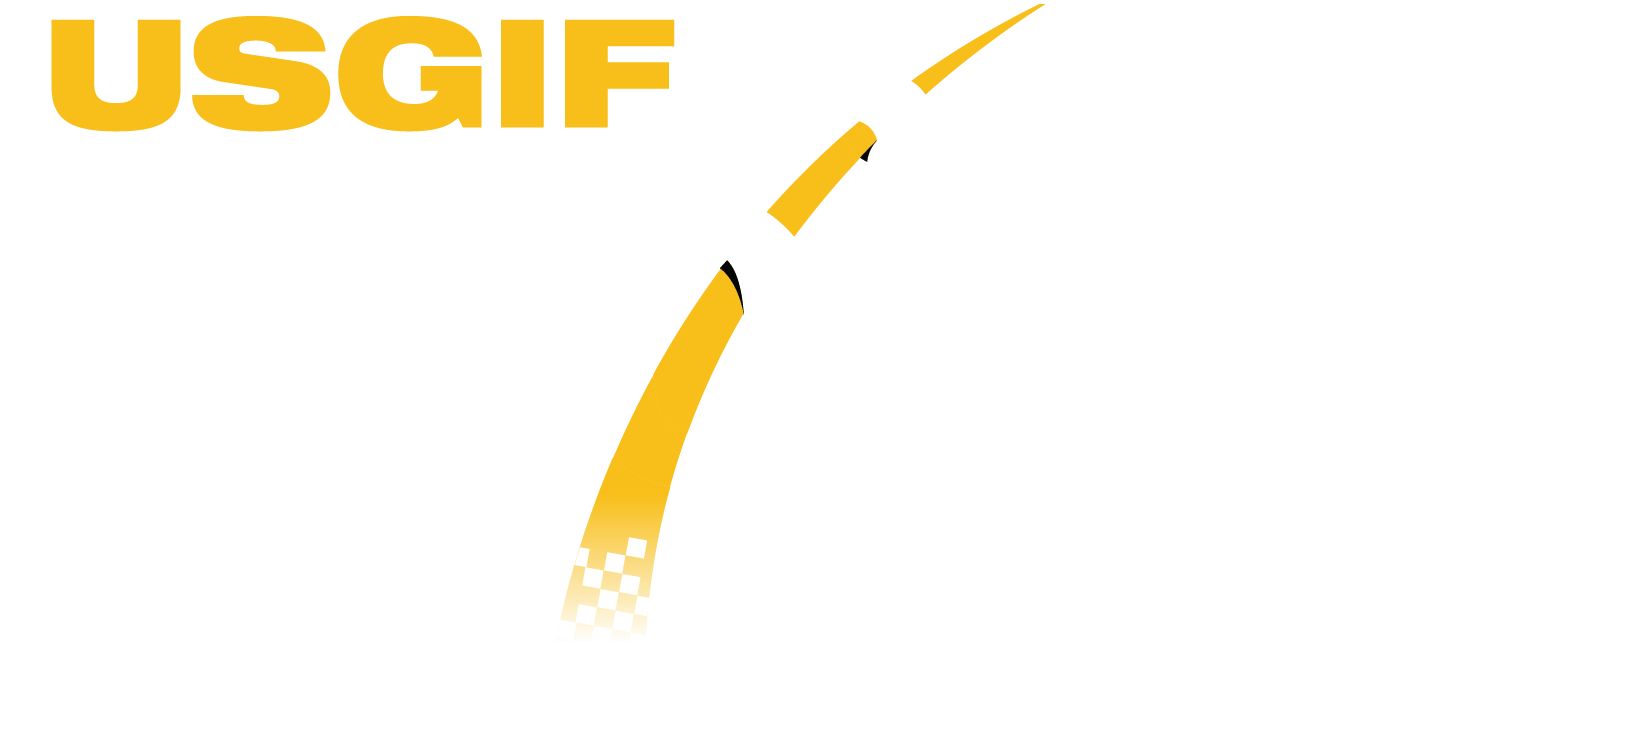 USGIF GEOINT Symposium 2024